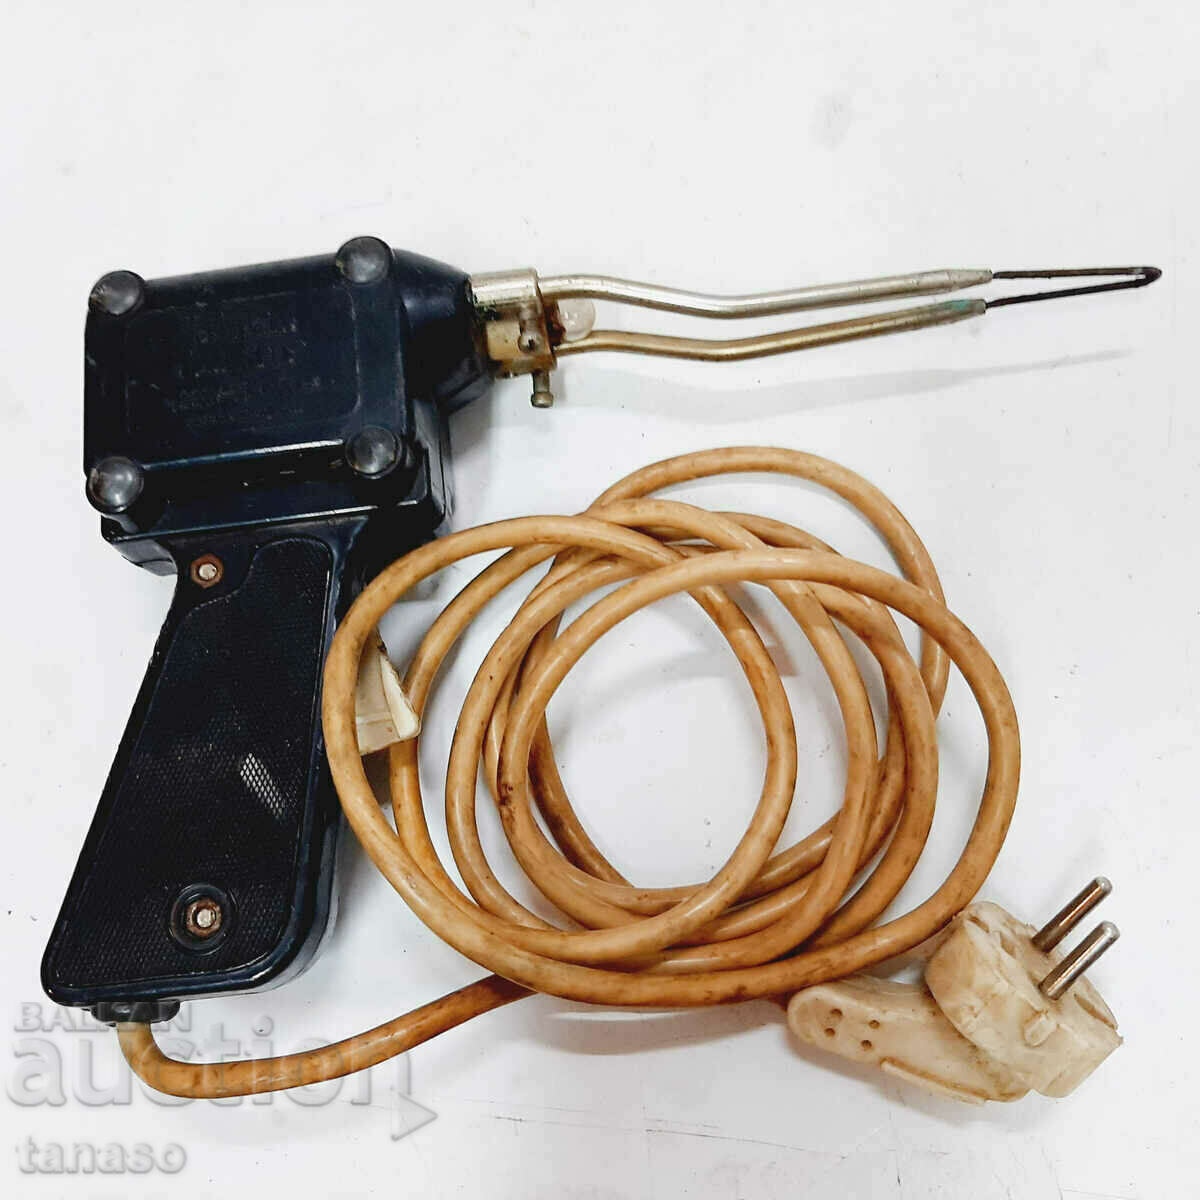 Old bakelite induction soldering iron(15.1)